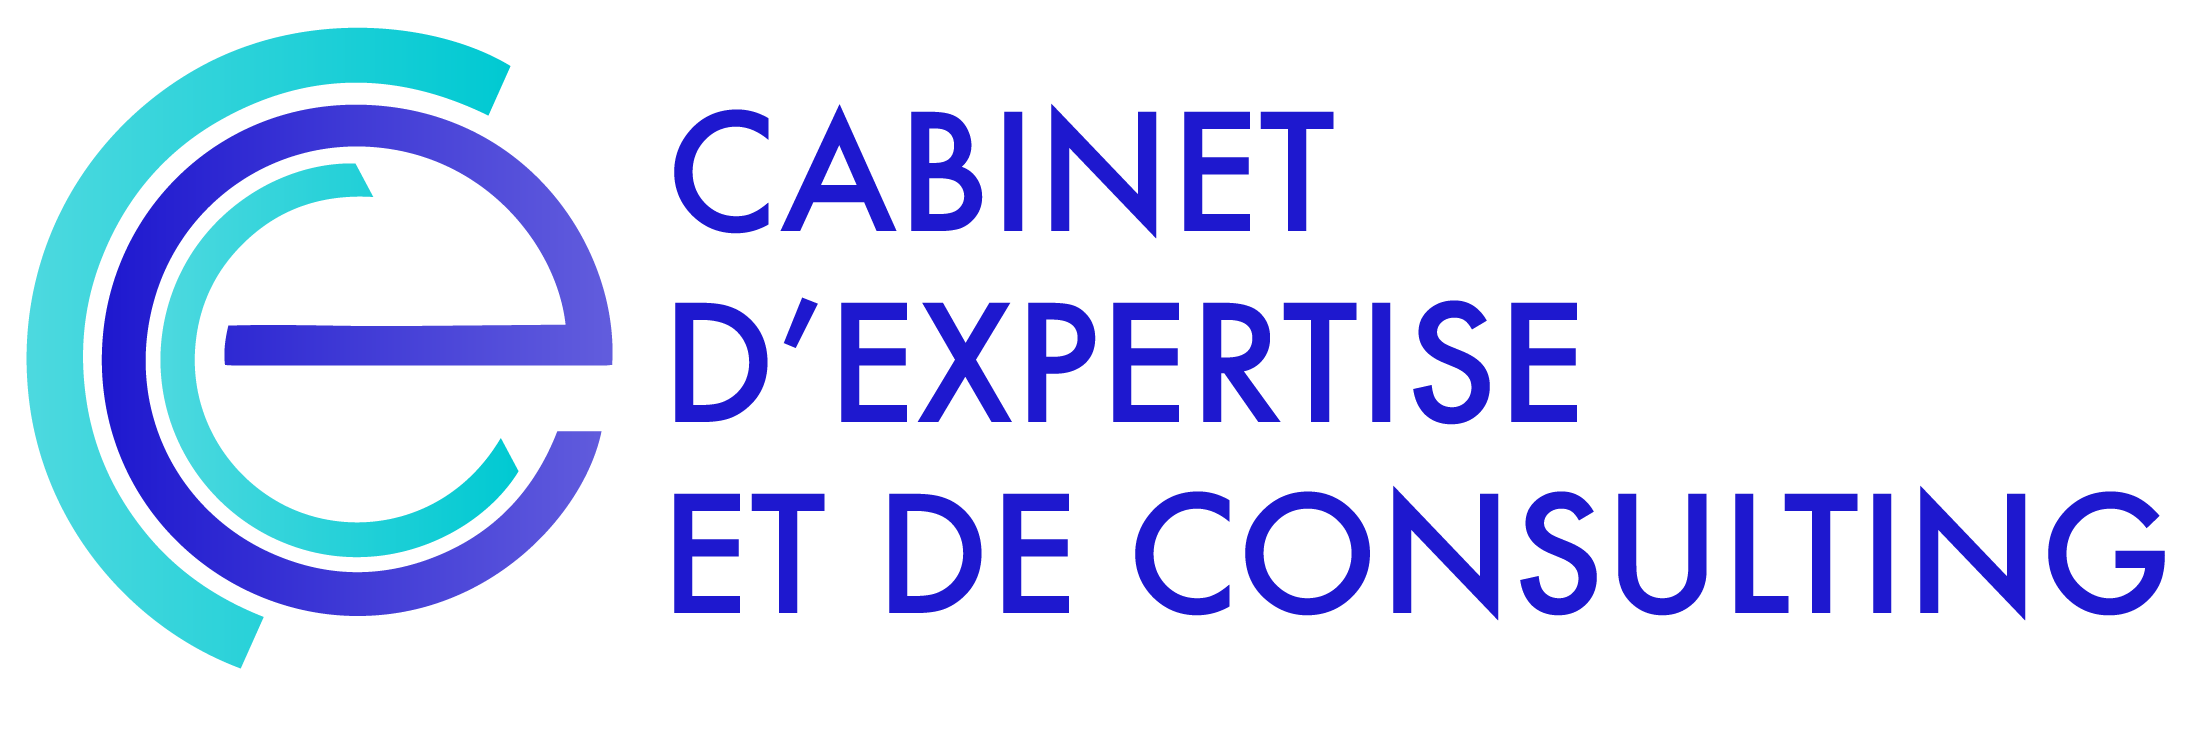 CABINET D’EXPERTISE ET DE CONSULTING